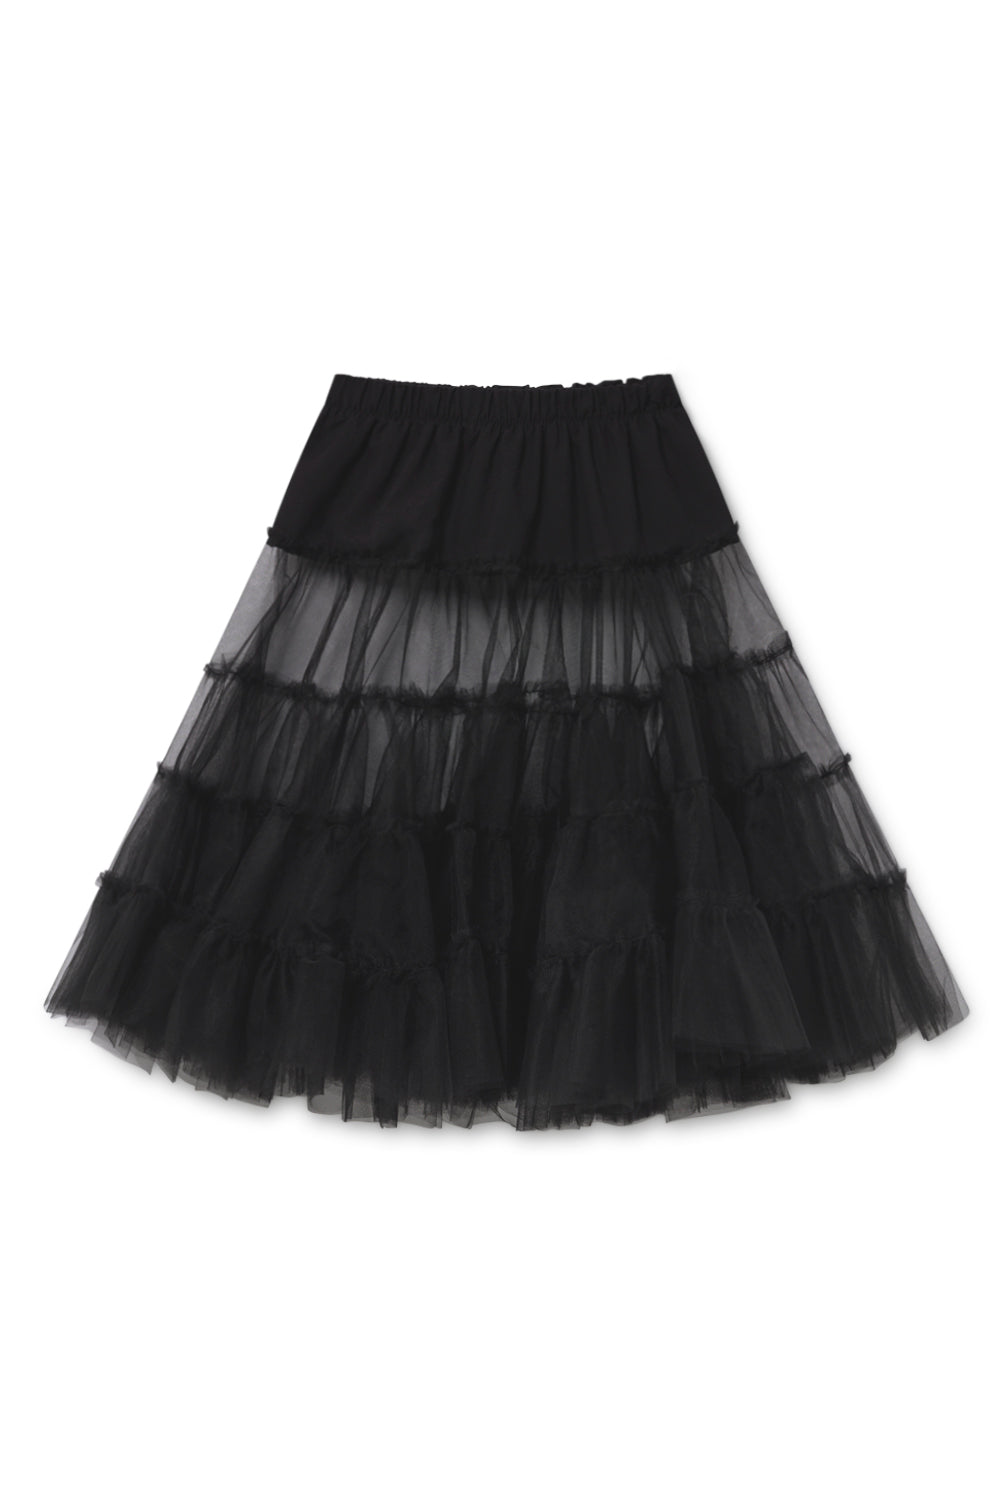 Little Creative Factory Sestina Mini Skirt - Black